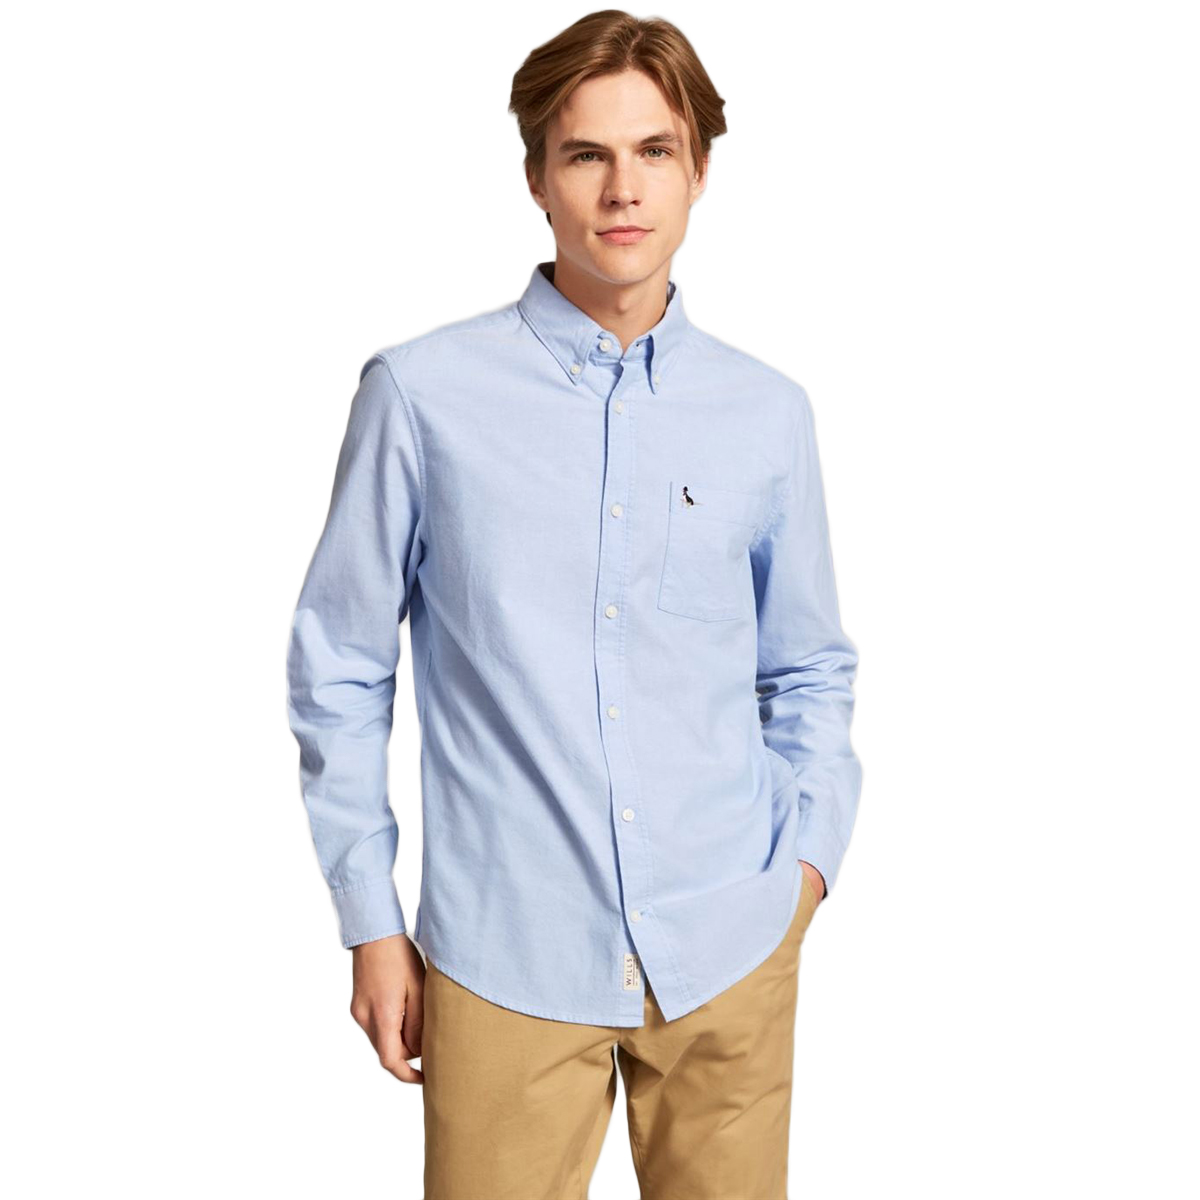 Jack Wills Men's Wadsworth Plain Oxford Shirt - Blue, L